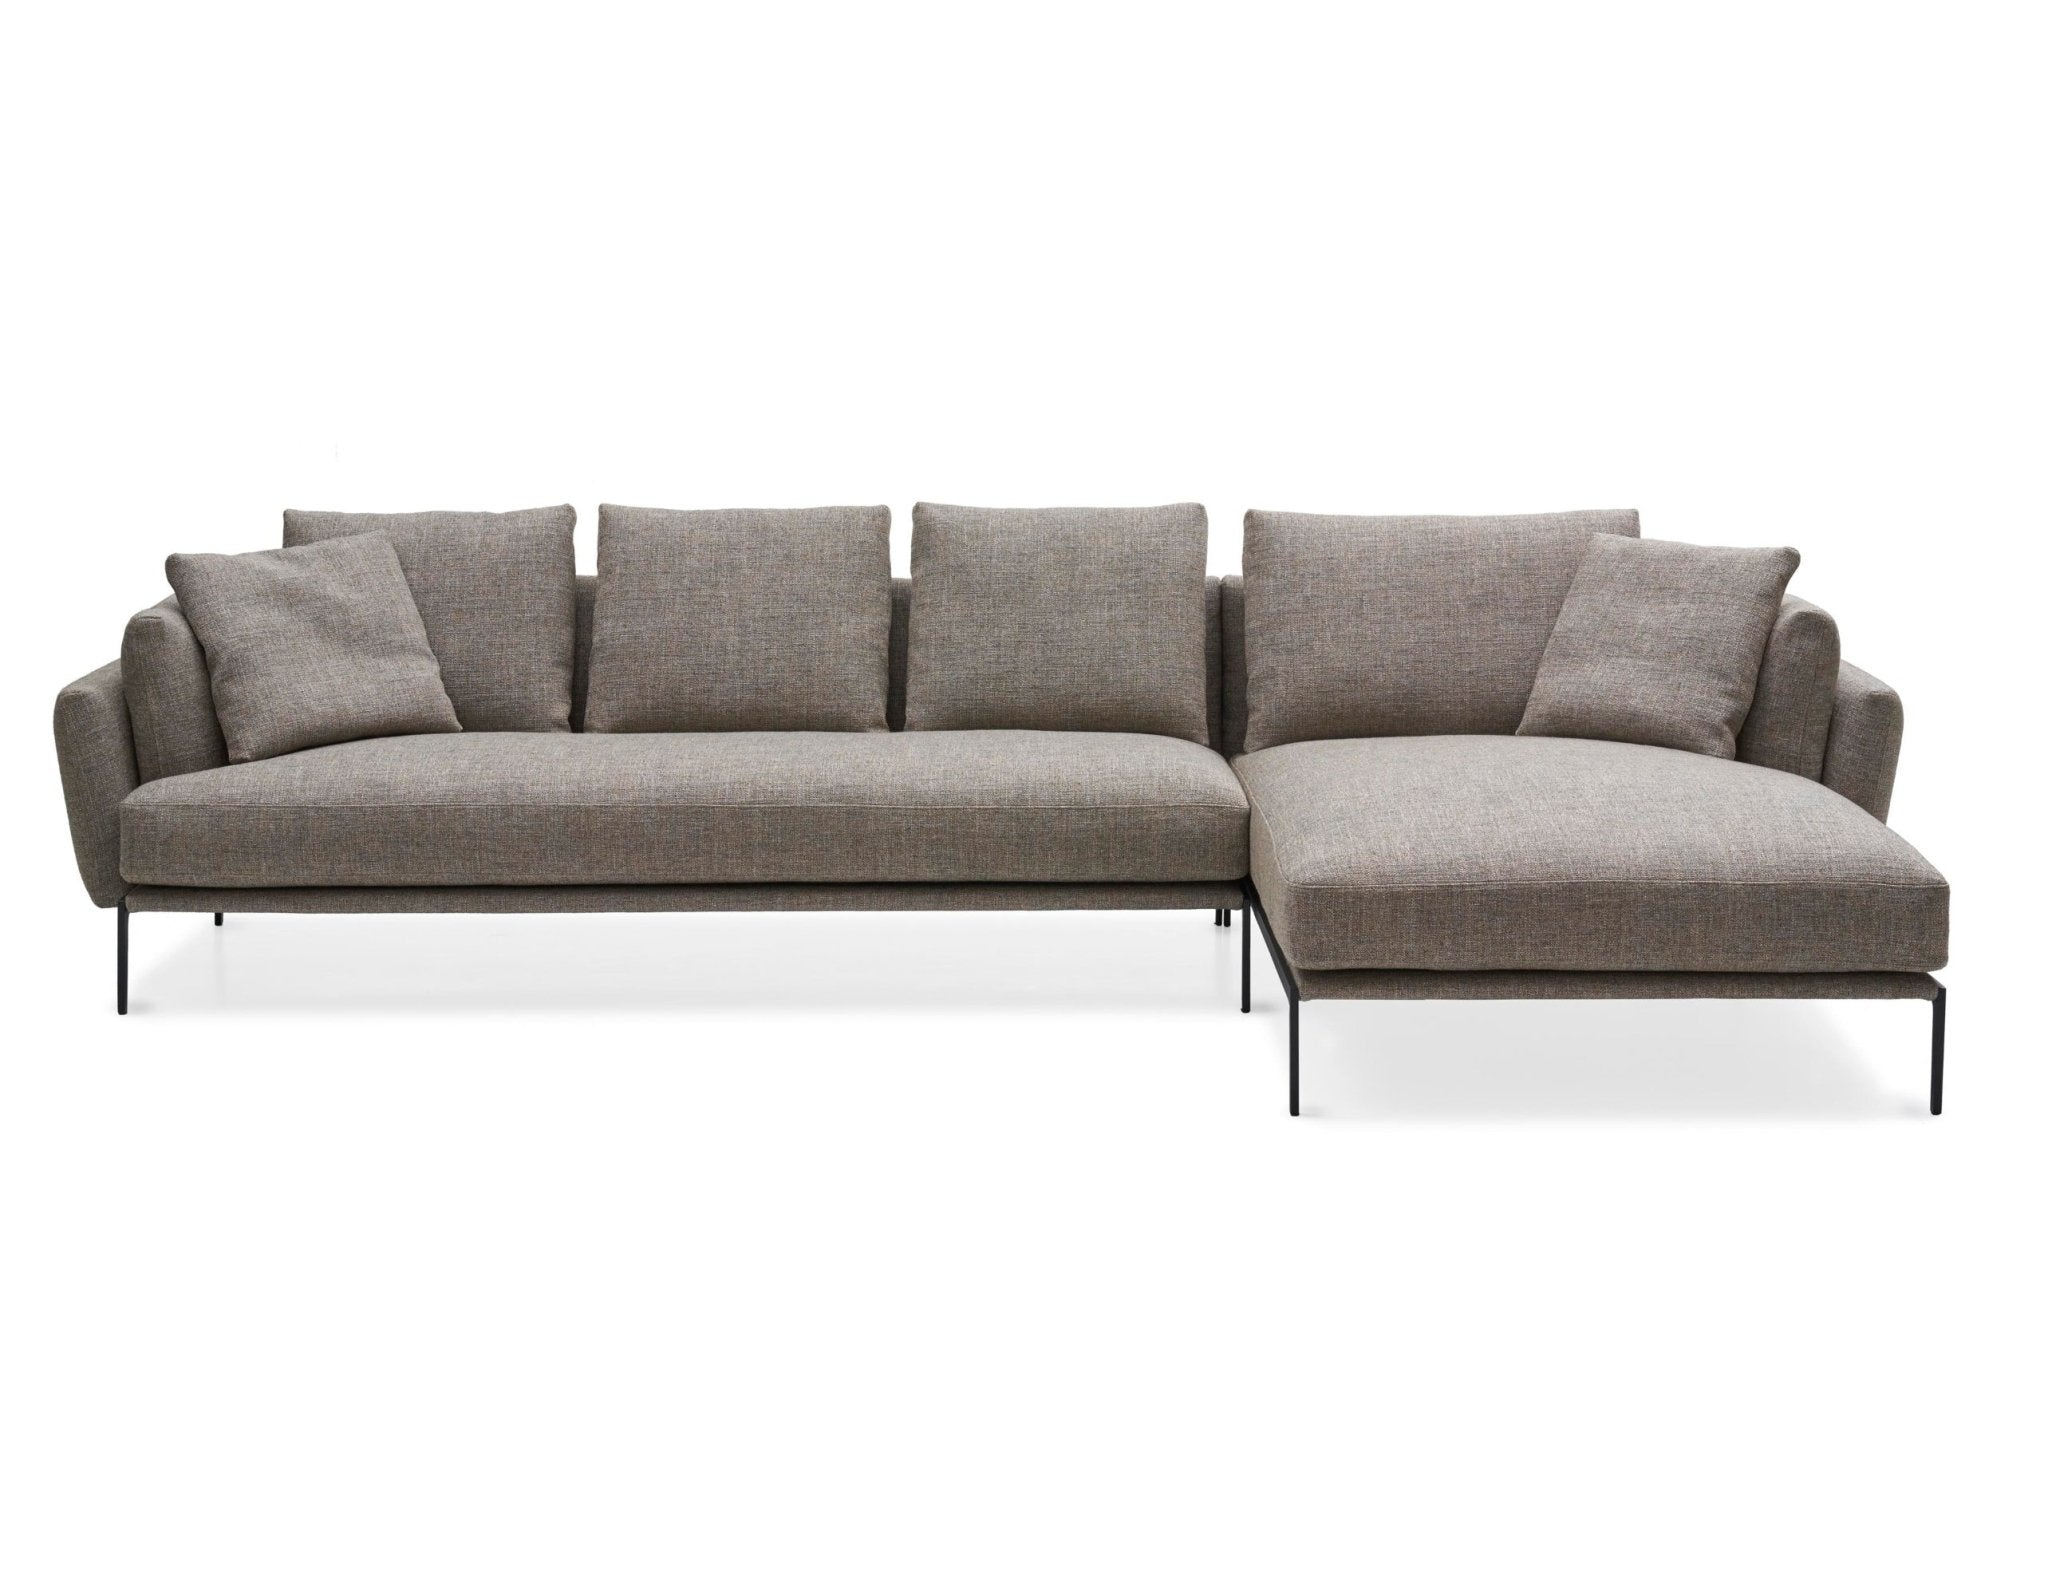 Adea Domino 288cm sohva - Laatukaluste